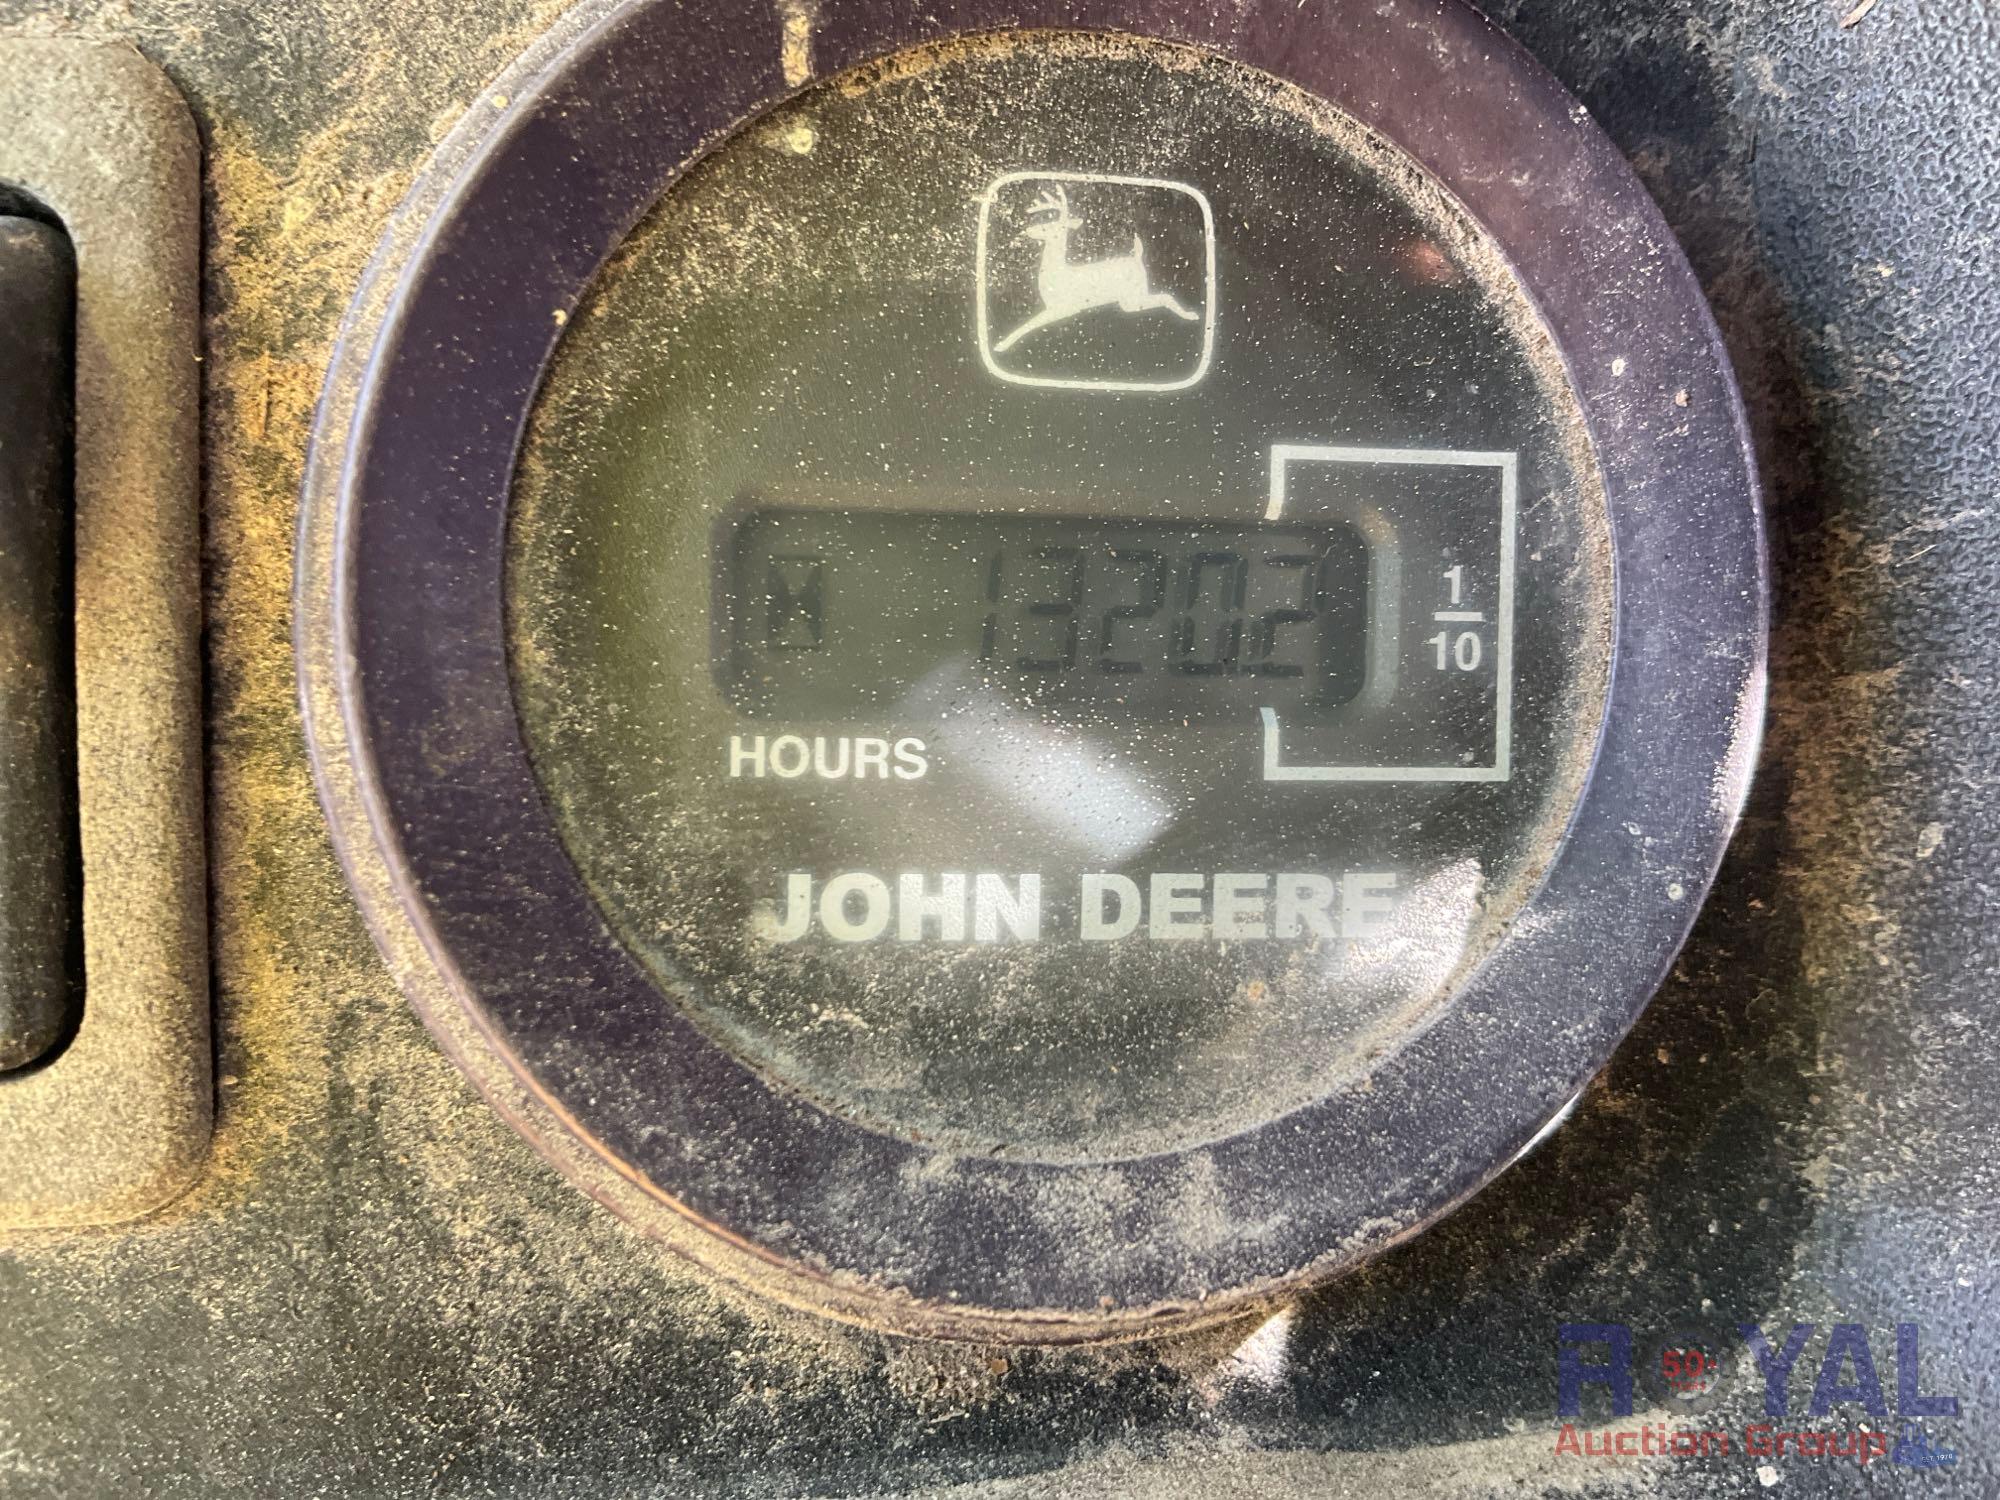 John Deere Gator Utility Cart